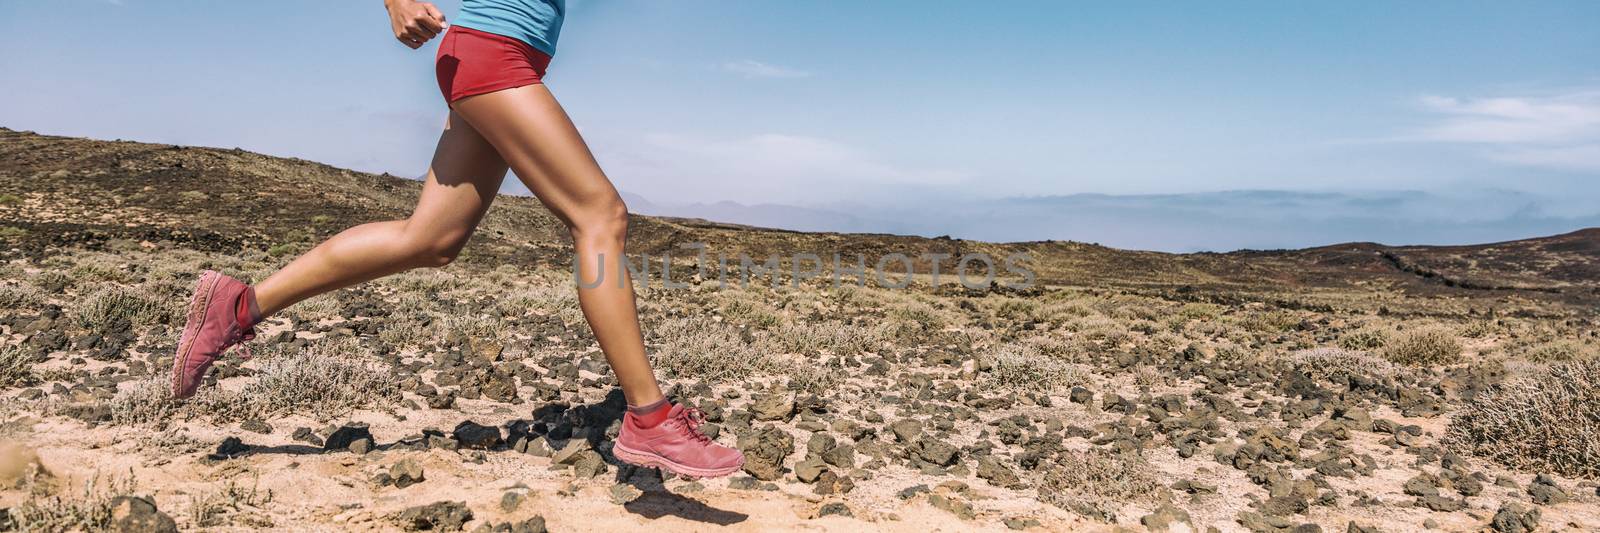 Sport exercise fitness female athlete runner running on trail run race in desert panorama banner. Closeup of legs and running shoes.